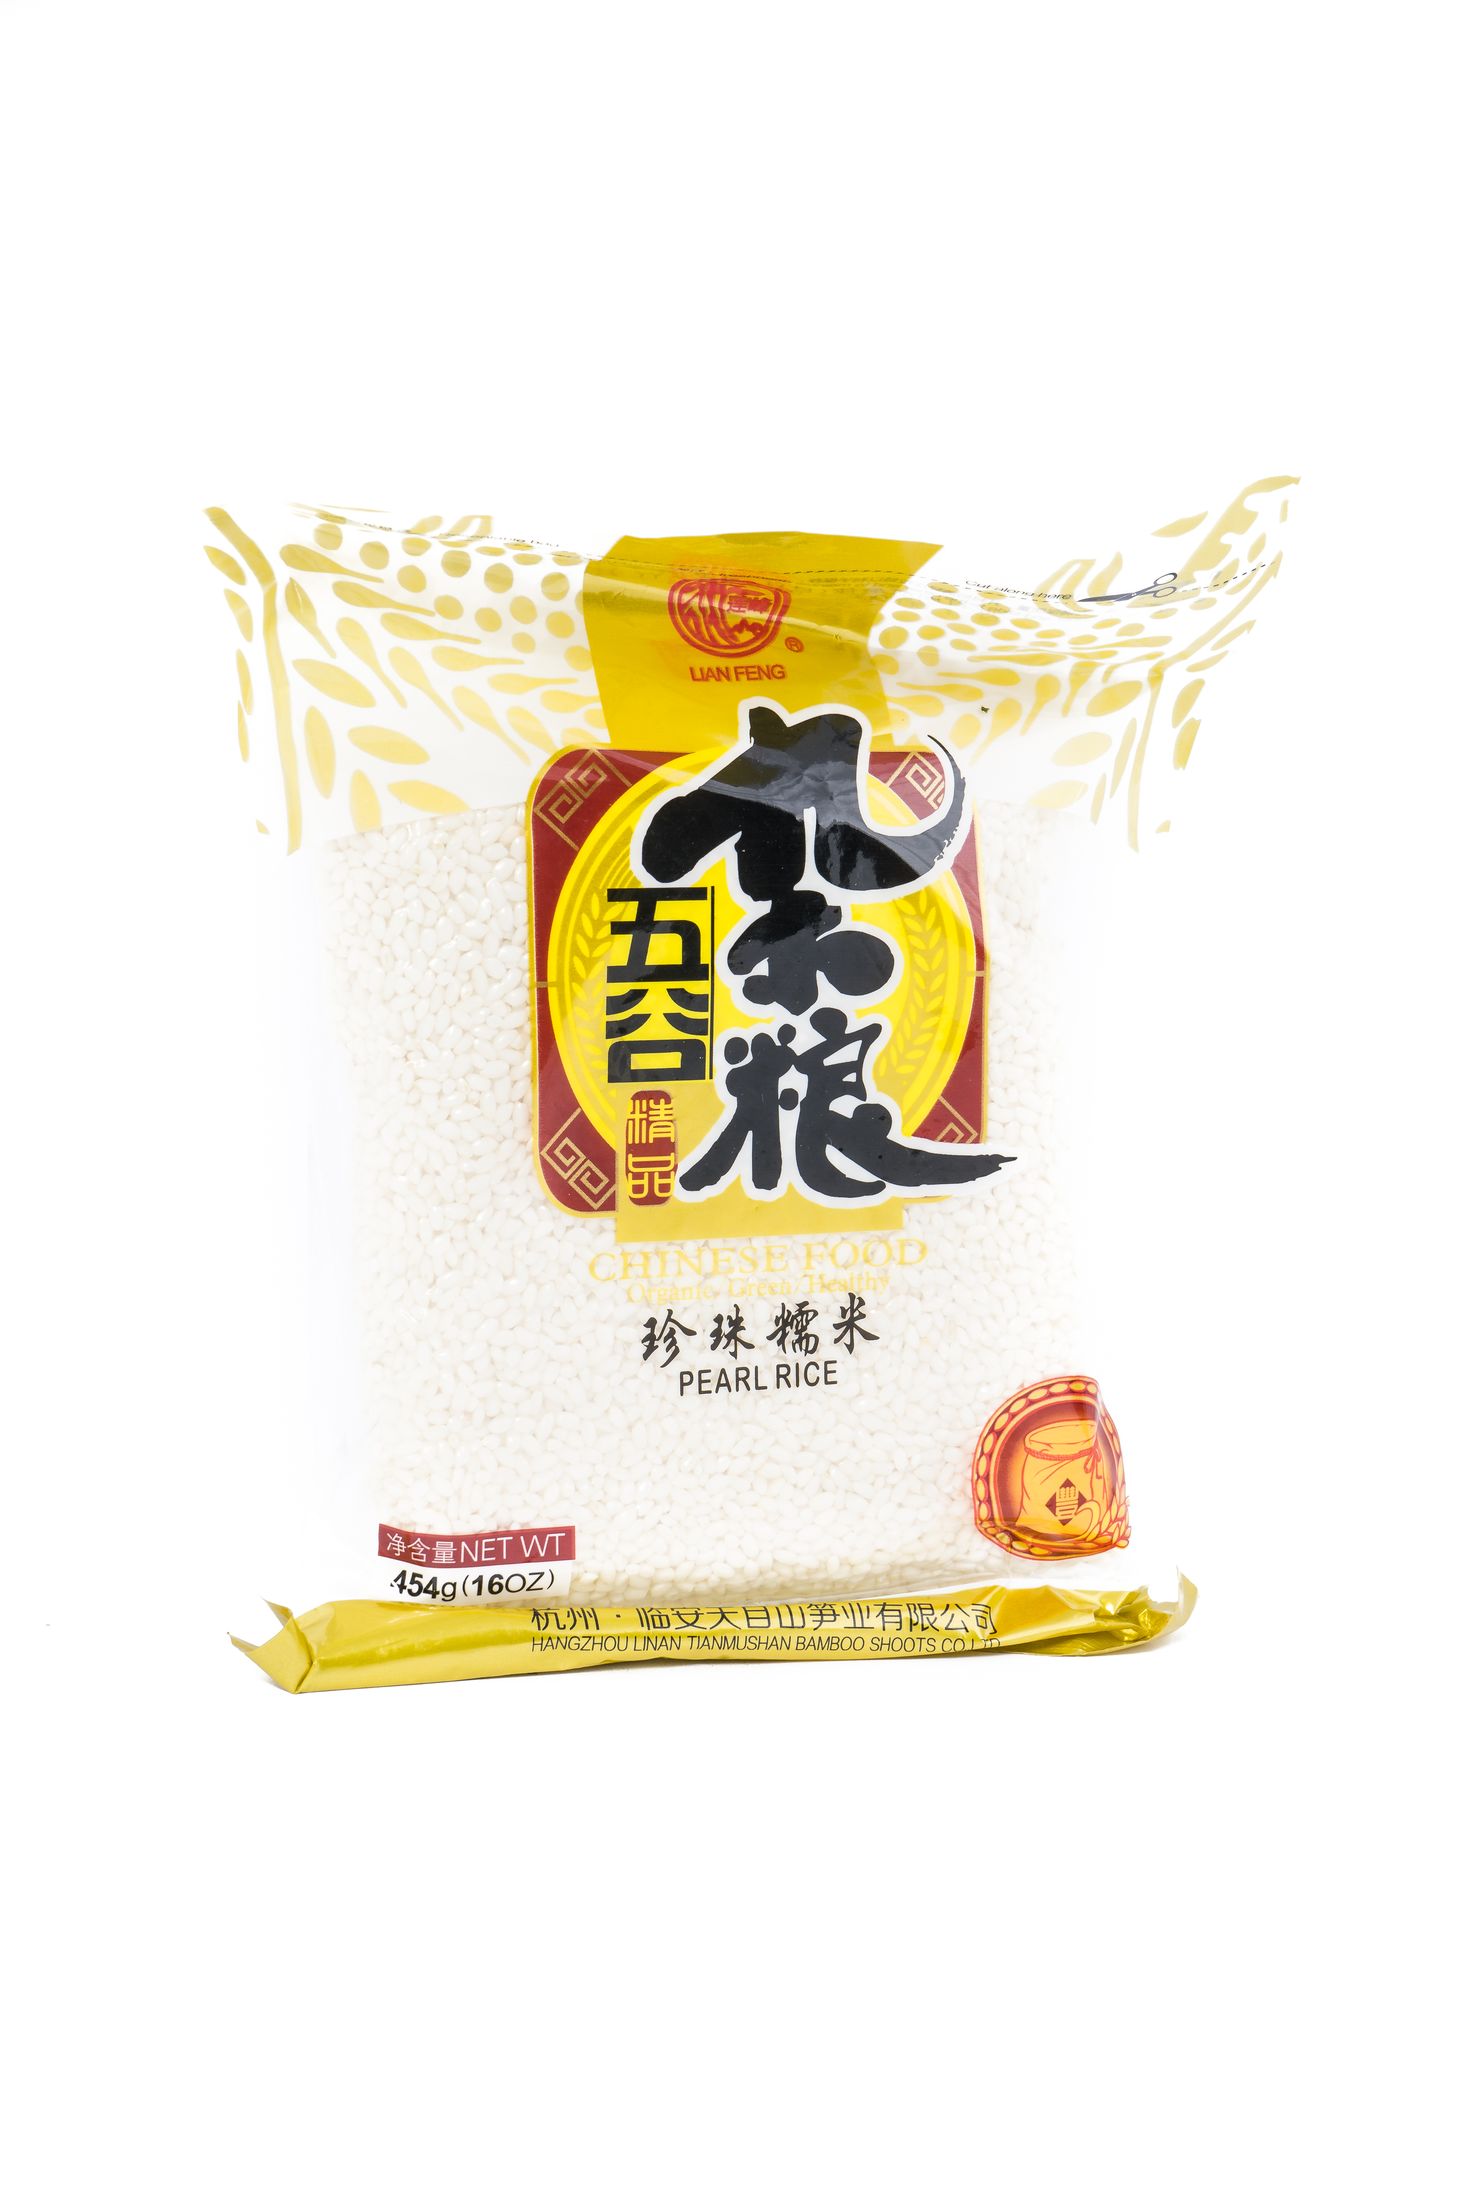 Lian Feng Pearl rice